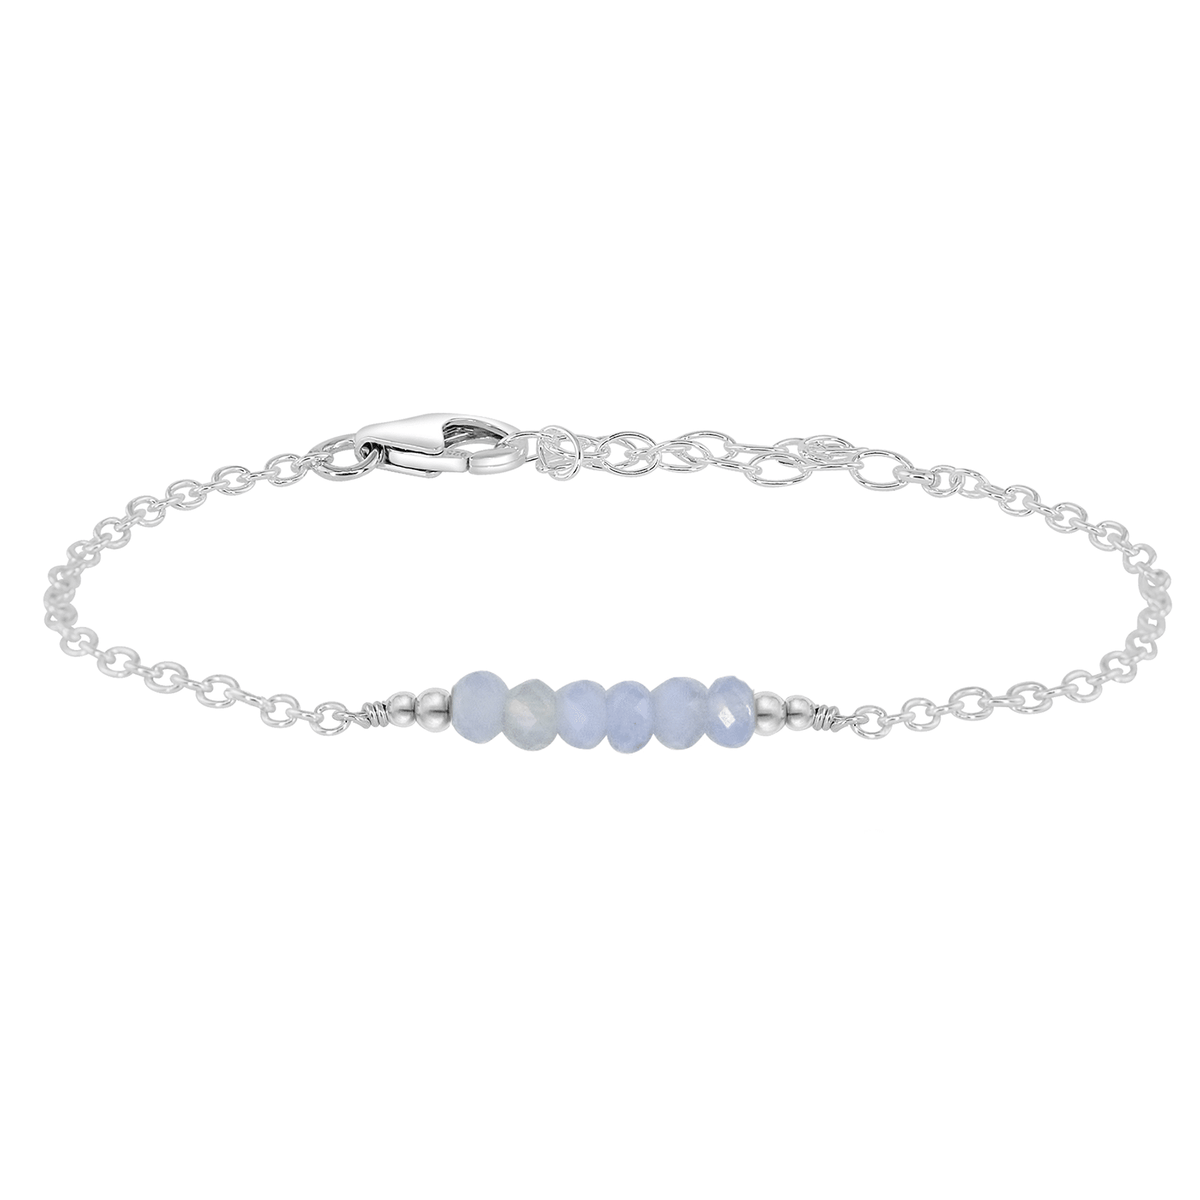 Faceted Bead Bar Bracelet - Blue Lace Agate - Sterling Silver - Luna Tide Handmade Jewellery